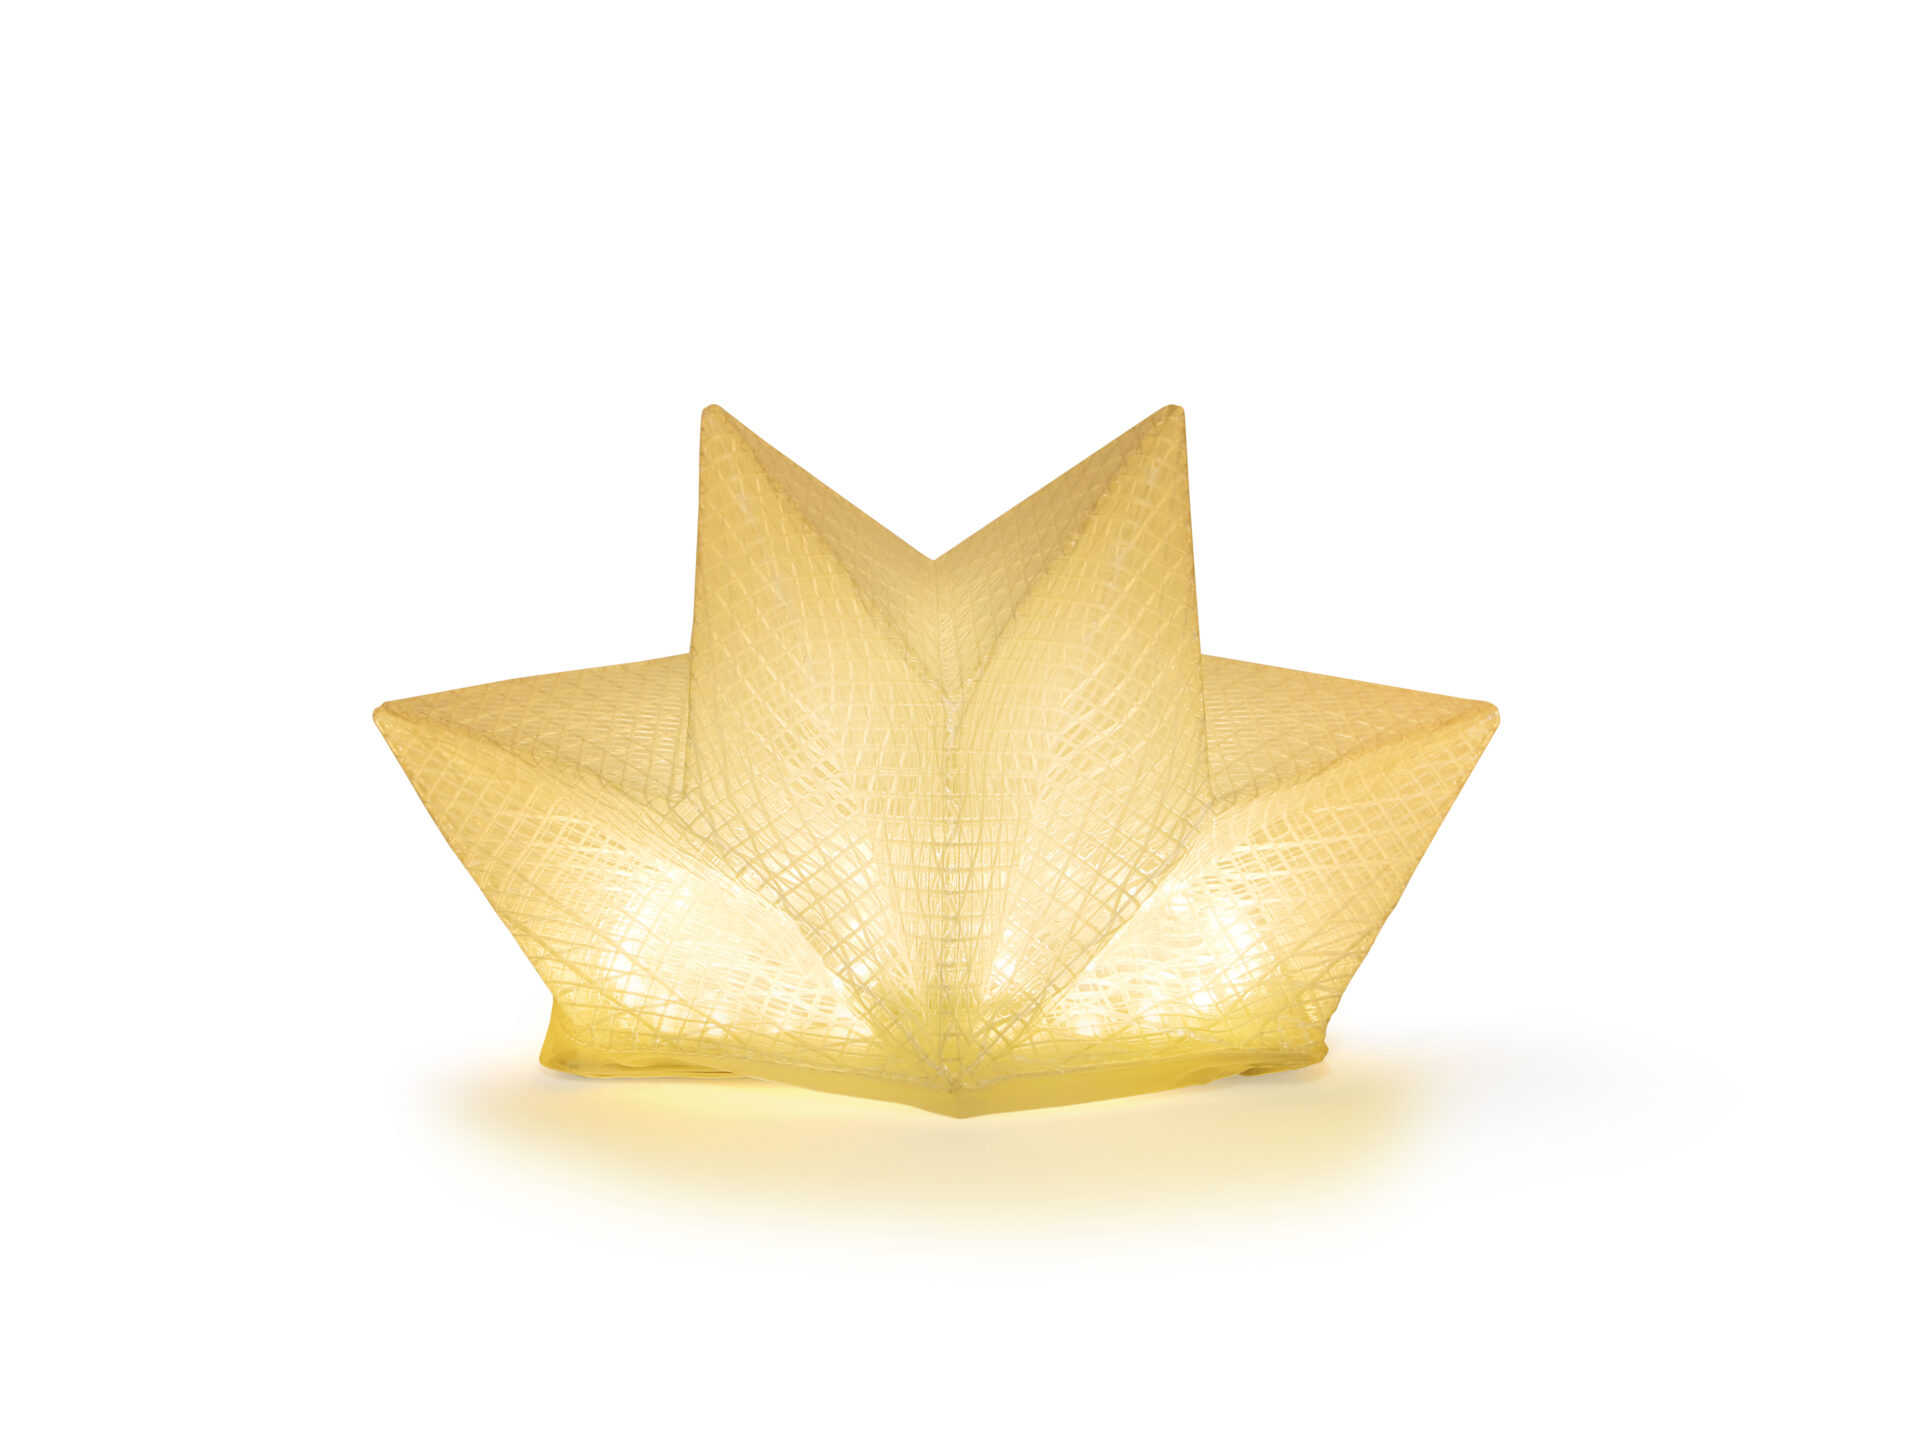 Solight solar lantern looks like a golden crown.